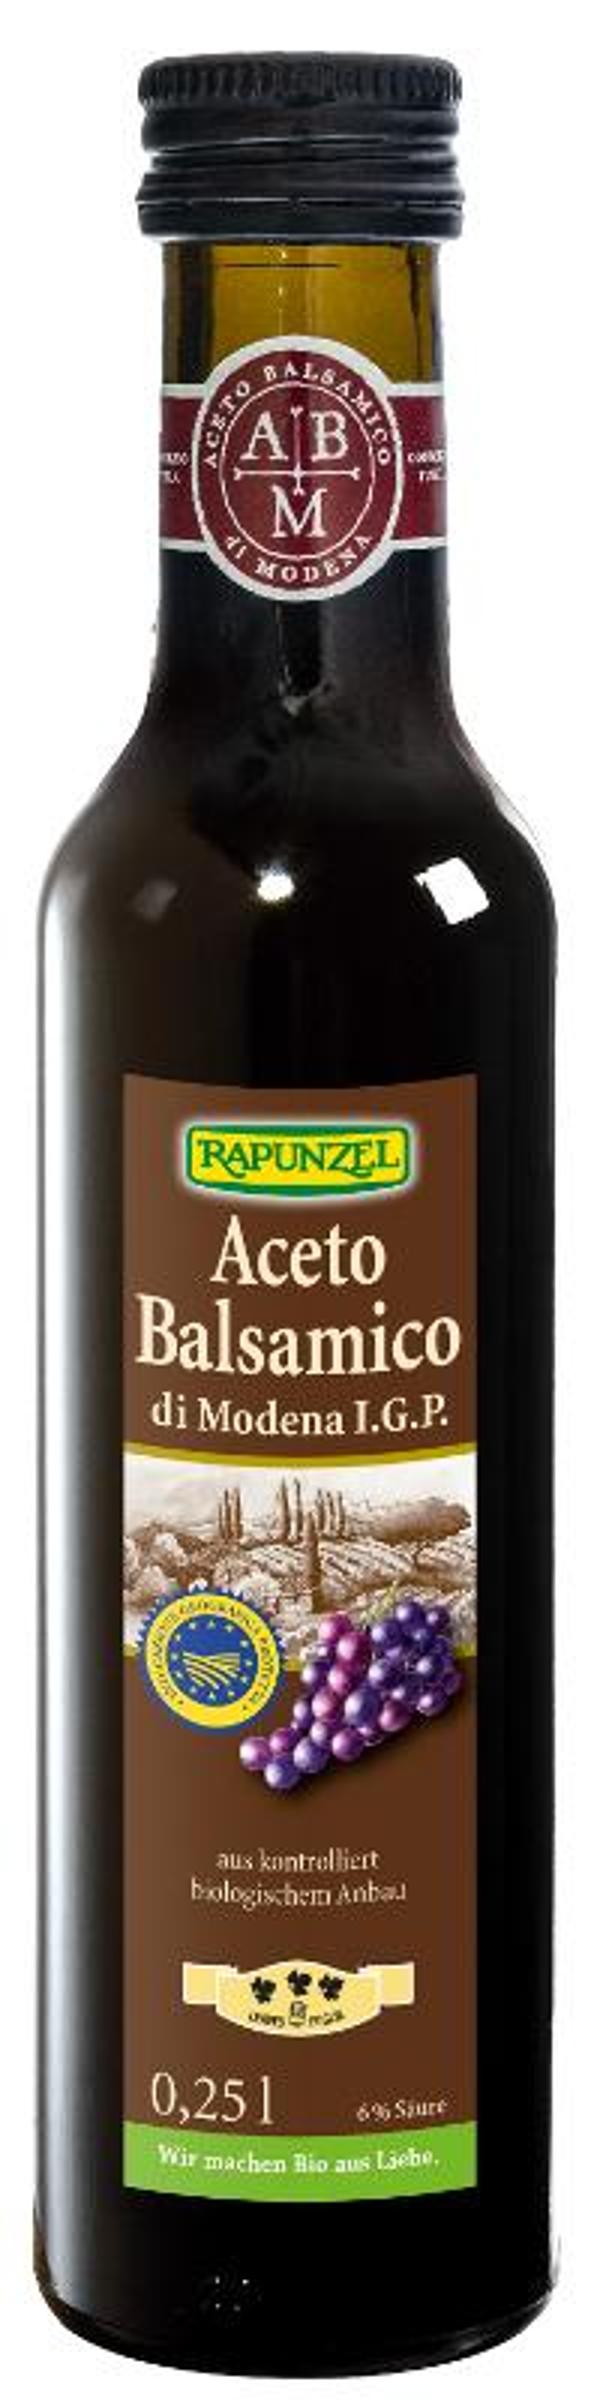 Produktfoto zu Aceto Balsamico di Modena I.G.P. (Speciale)